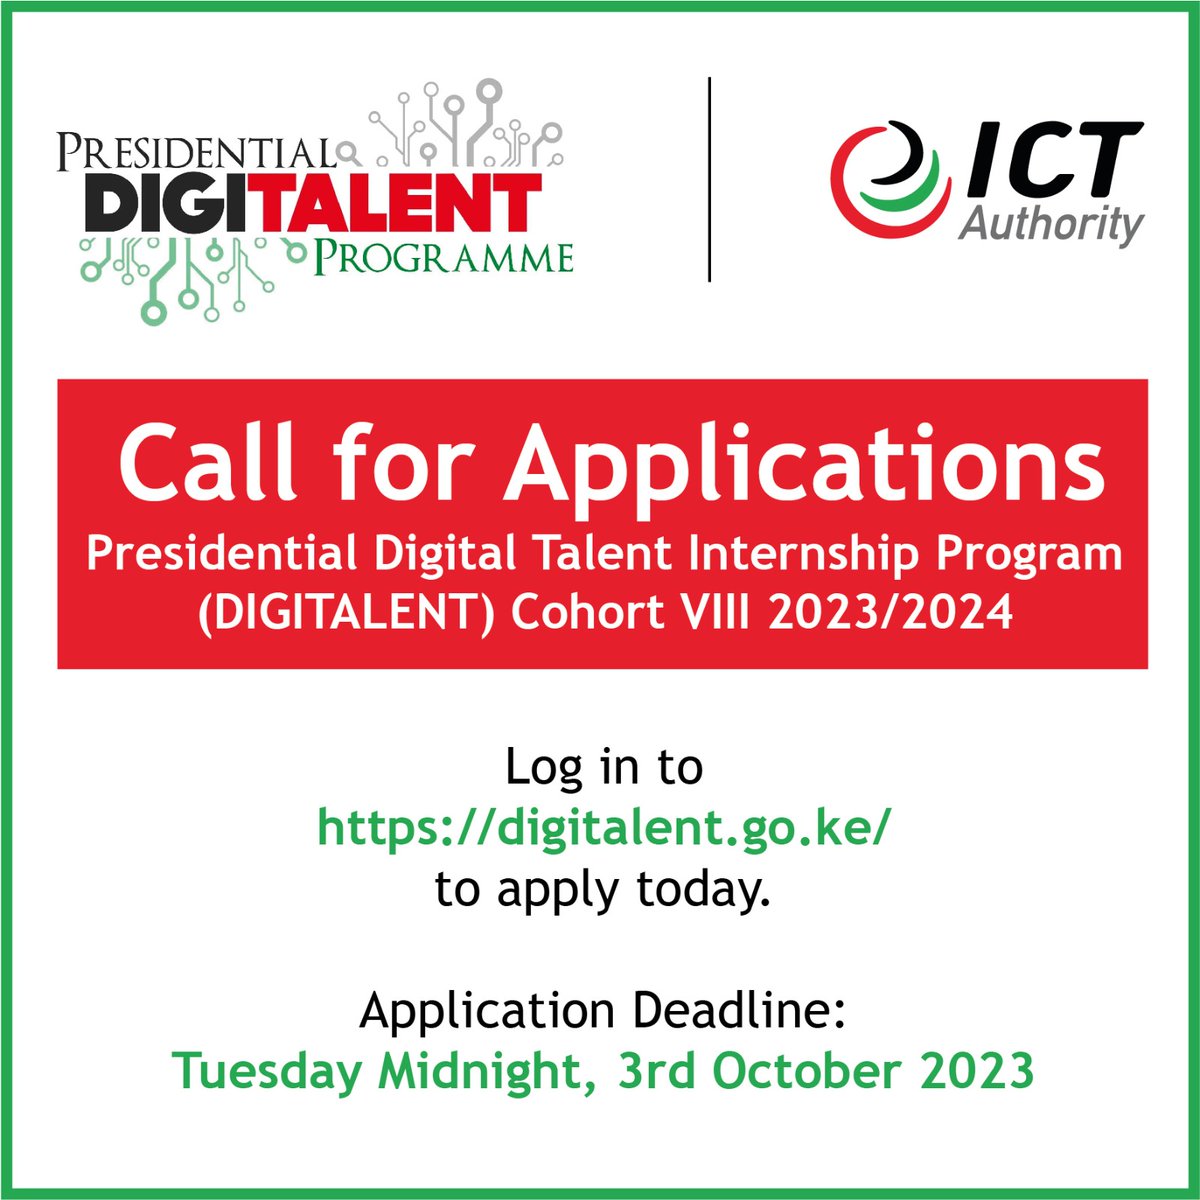 #OpportunityAlert 

FINAL CALL

Apply Today for the Presidential Digitalent Program Cohort VIII

recruitment.digitalent.go.ke

#Alert #Opportunity #IkoKazi #IkoKaziKe #EmploymentOpportunity #Vacancy #Technology #IT #DigitalTransformation